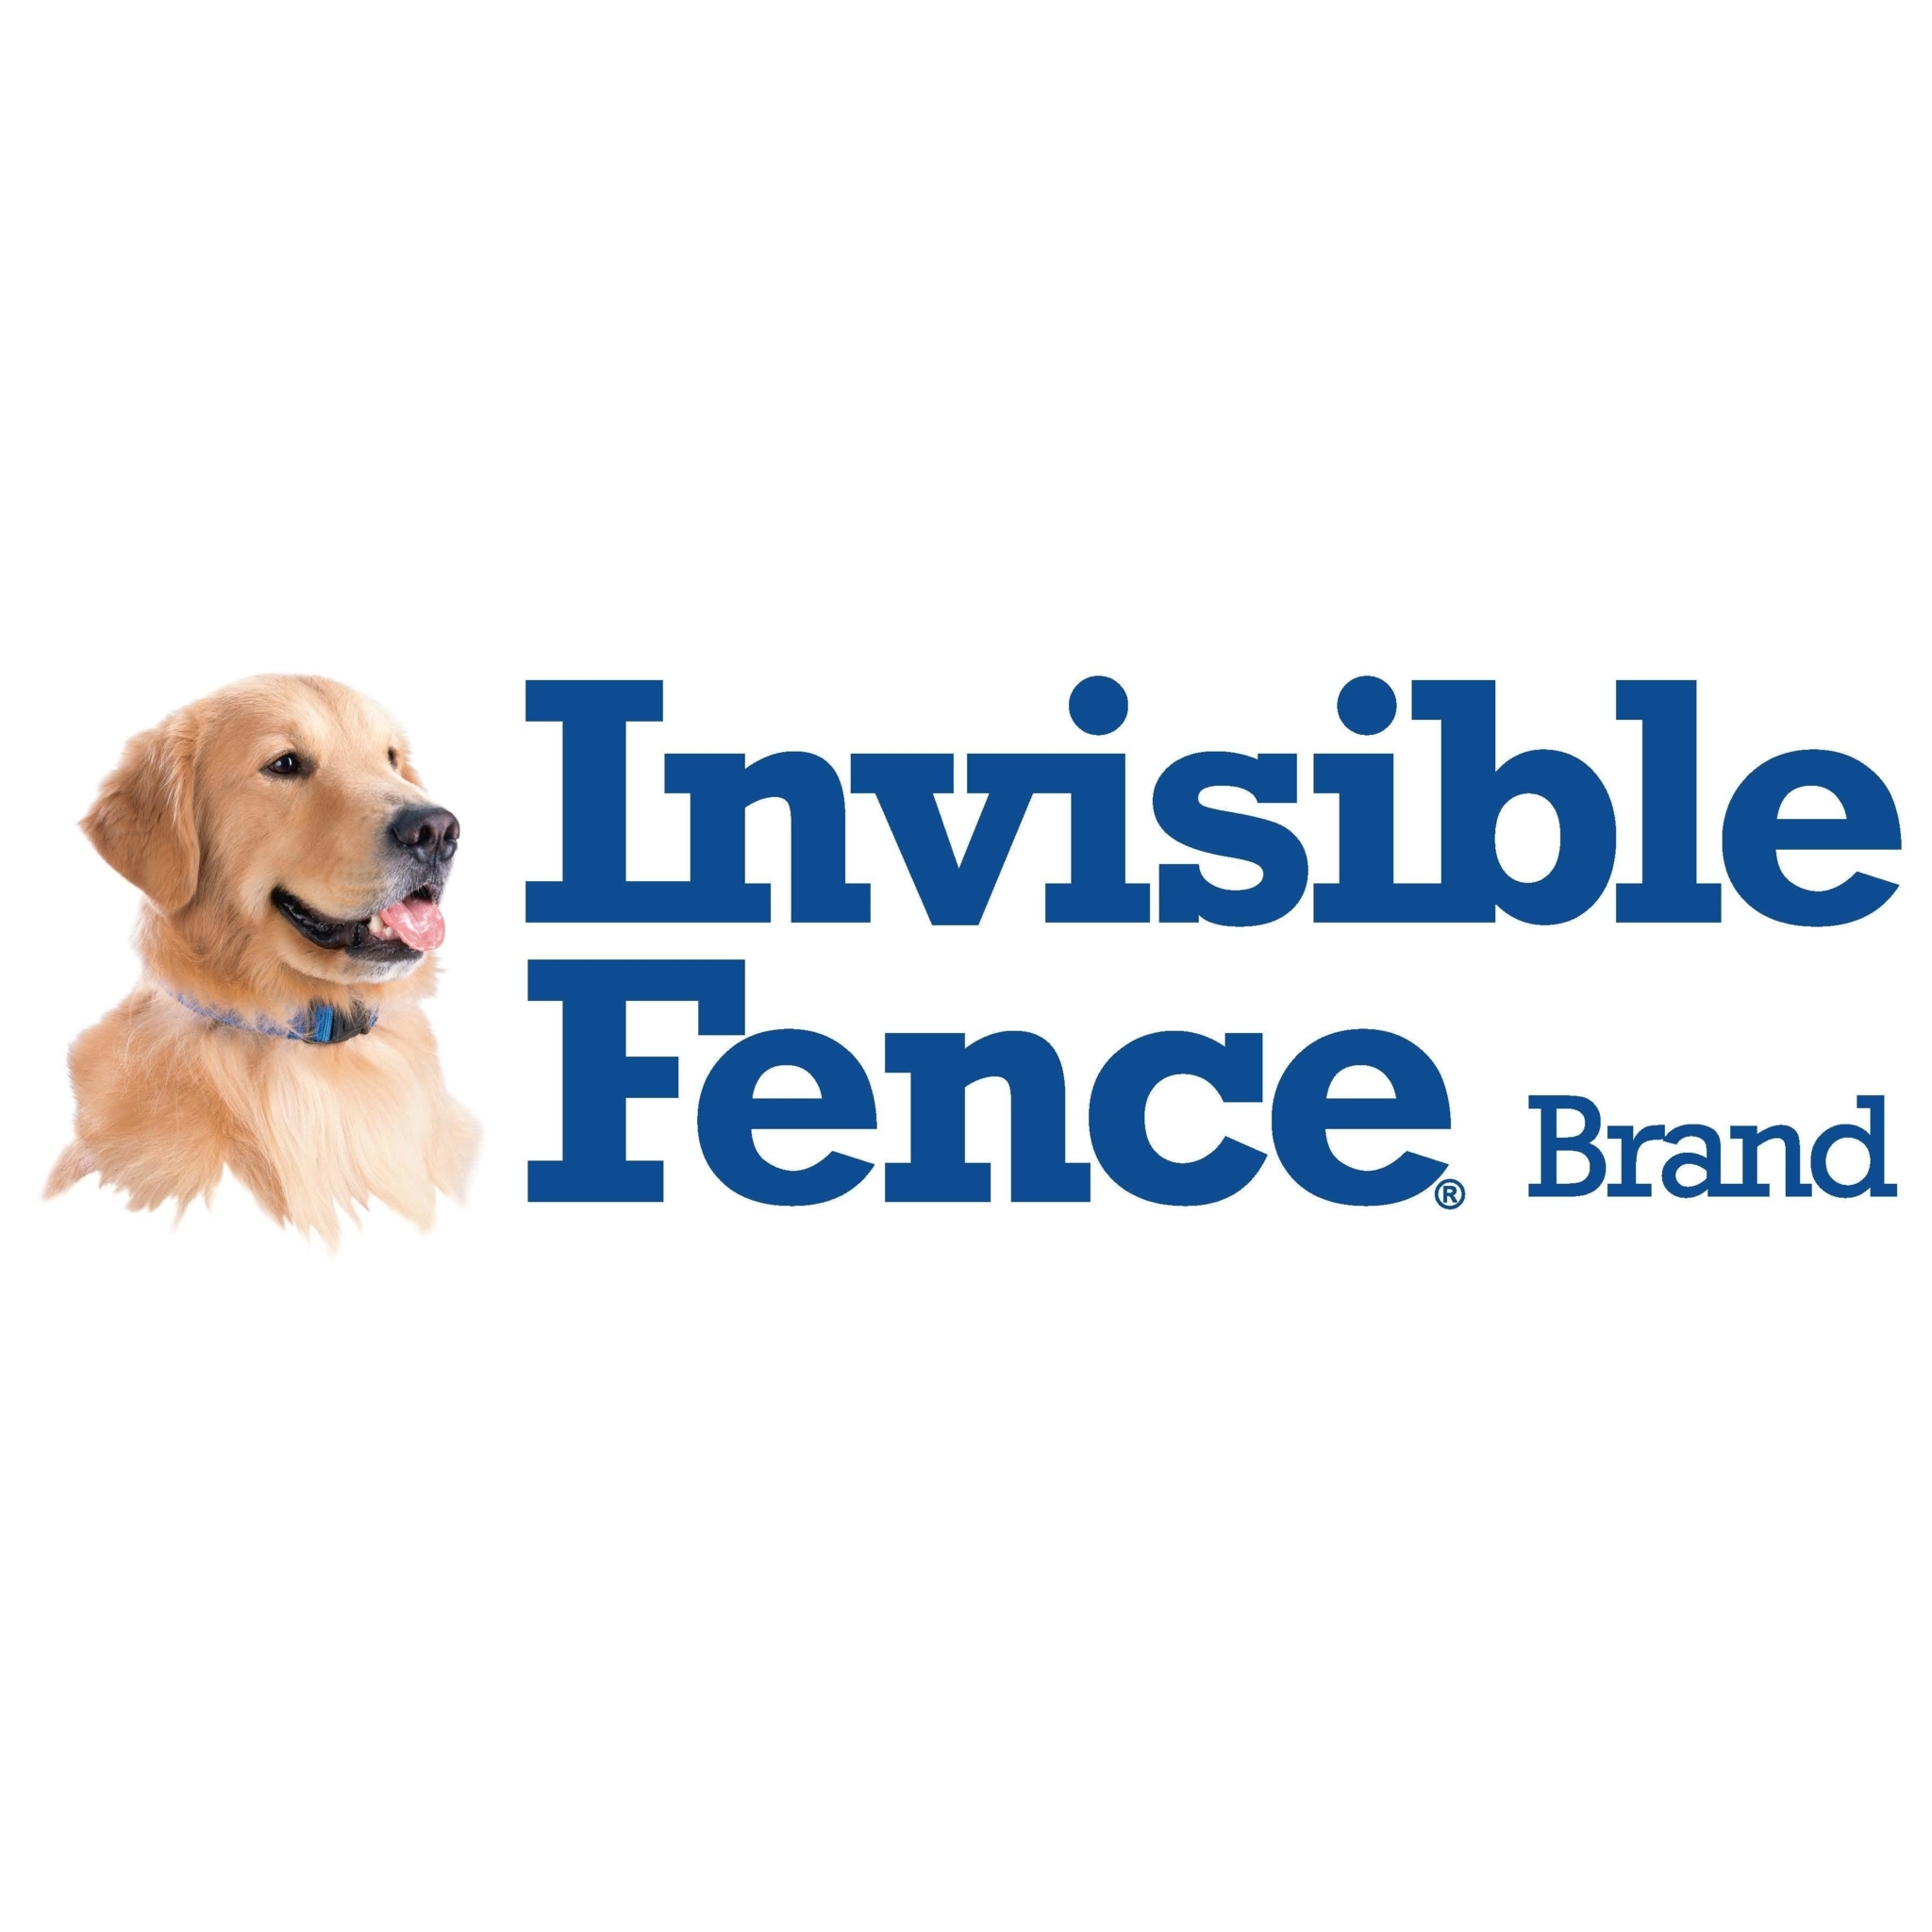 Invisible Fence Brand Nova Scotia - Fences